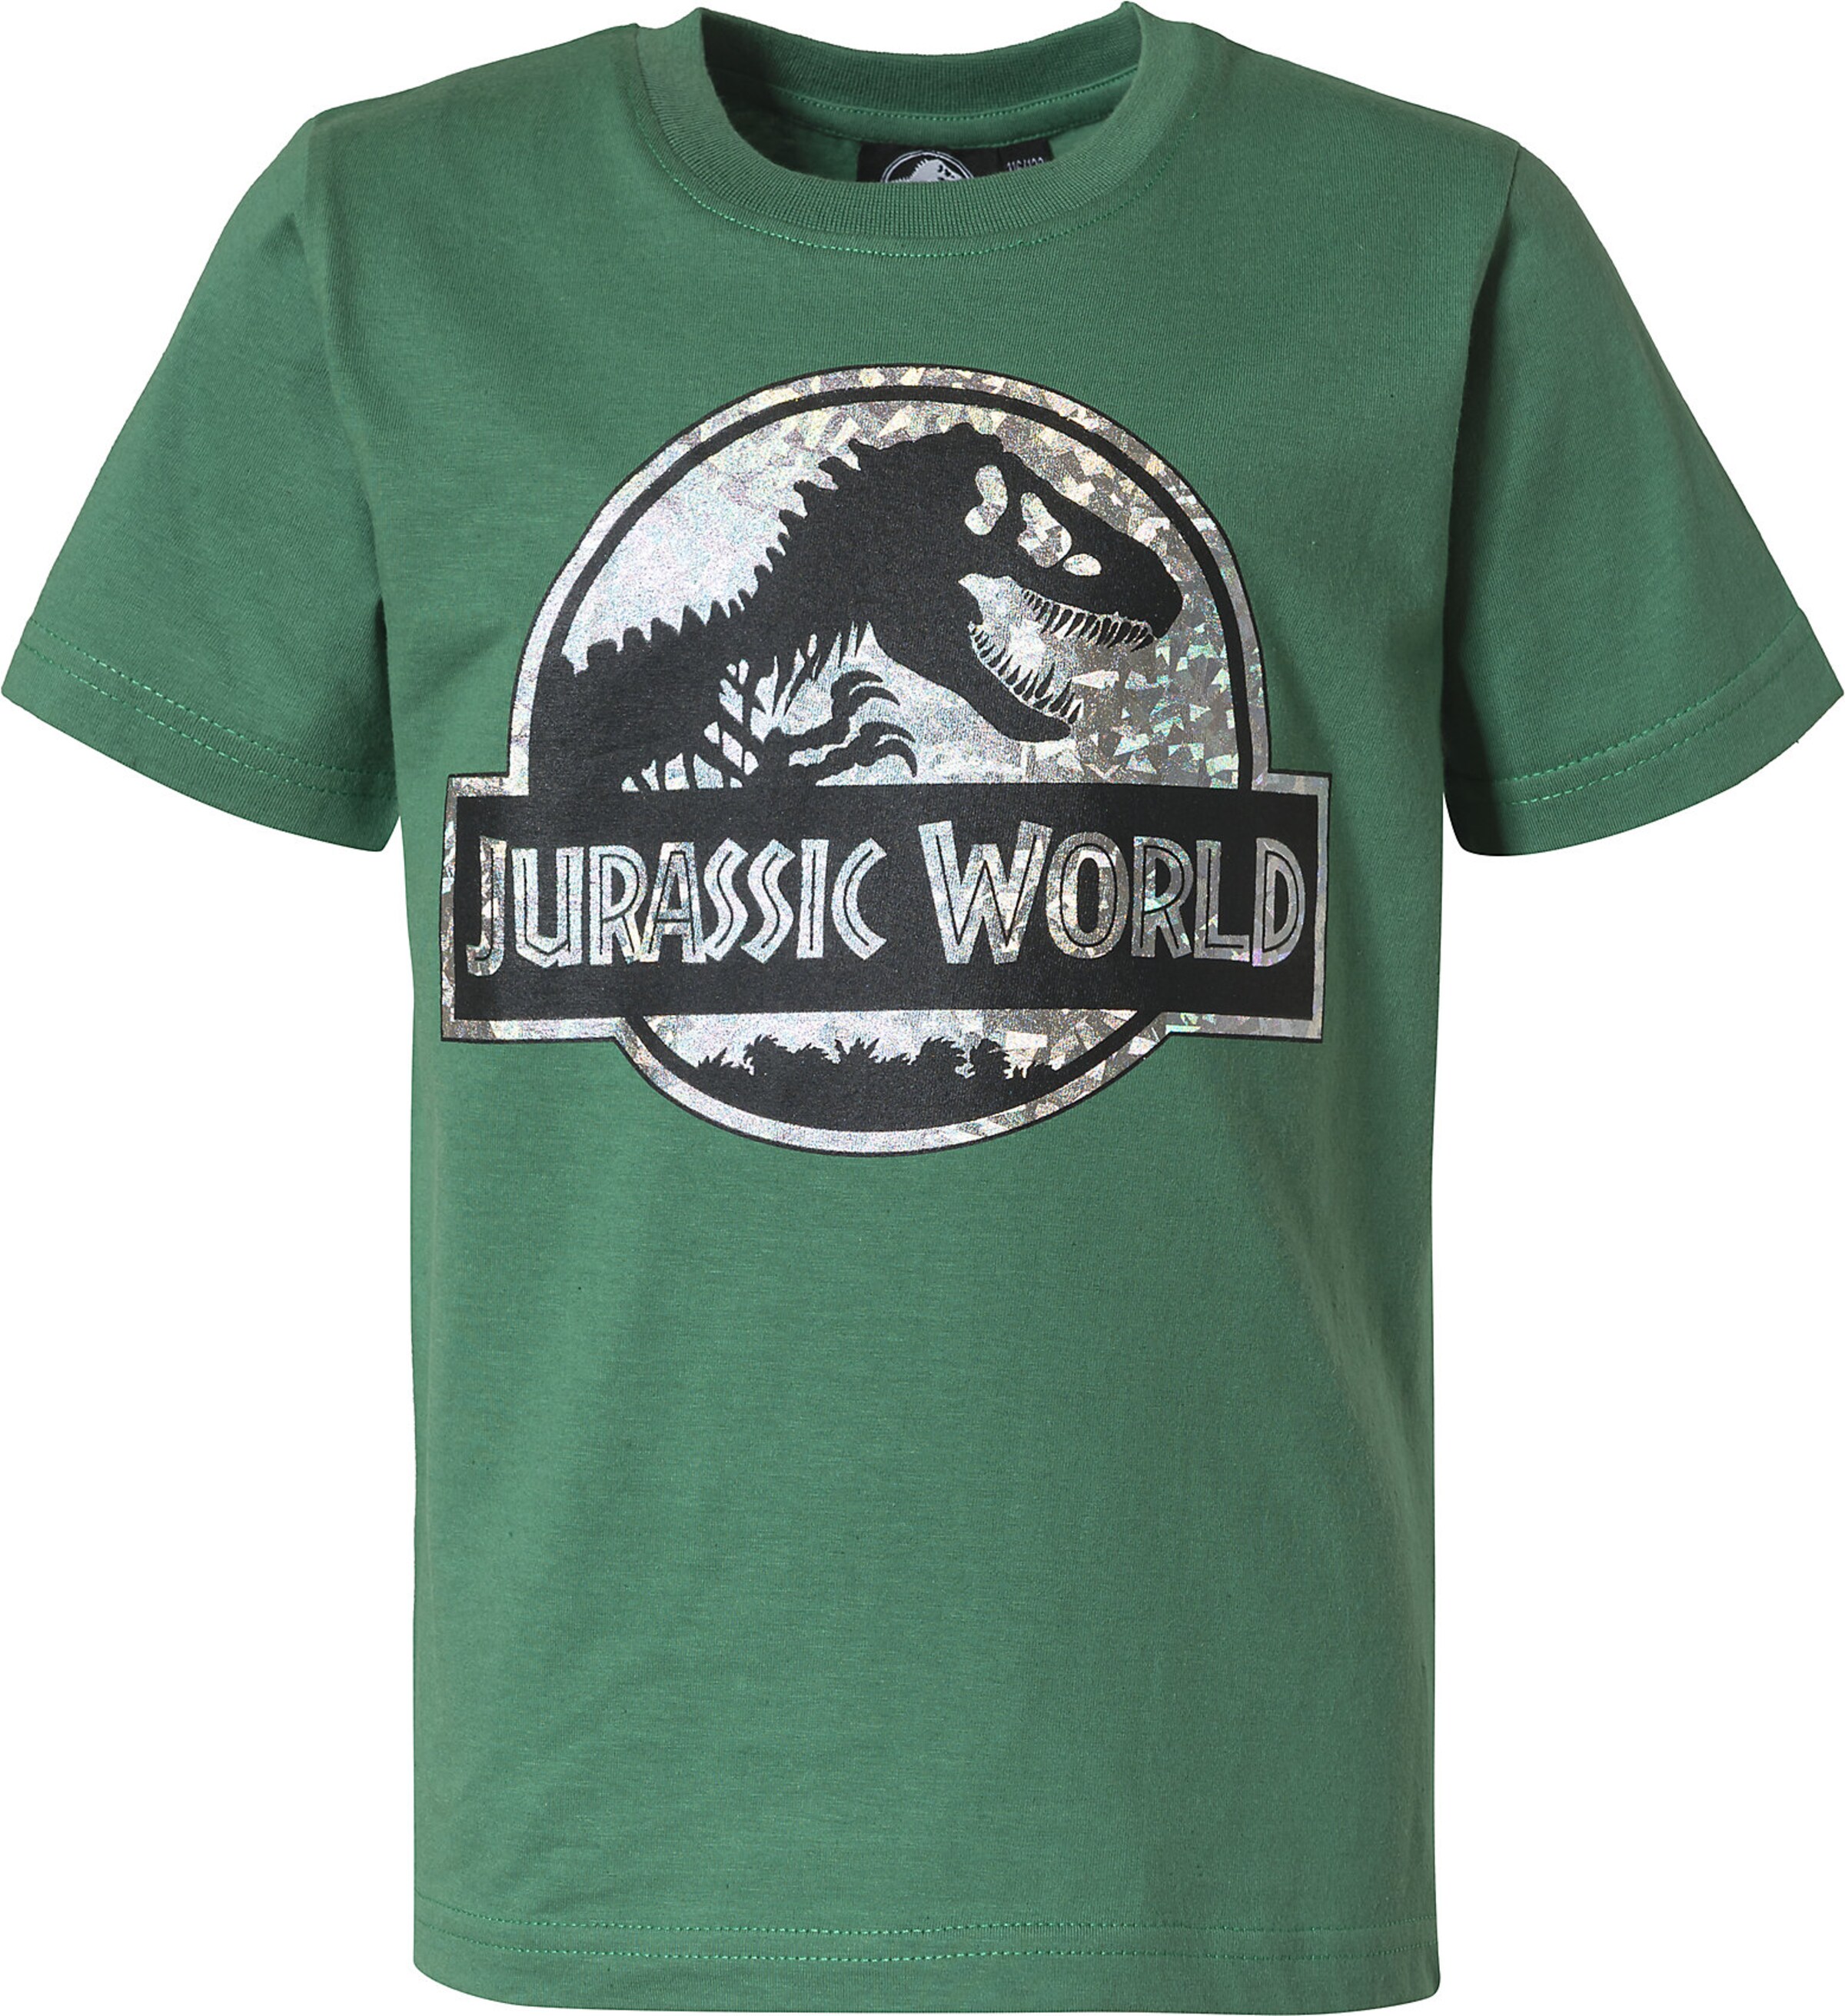 Kinder Teens (Gr. 140-176) Jurassic World Shirt in Dunkelgrün - IH88048